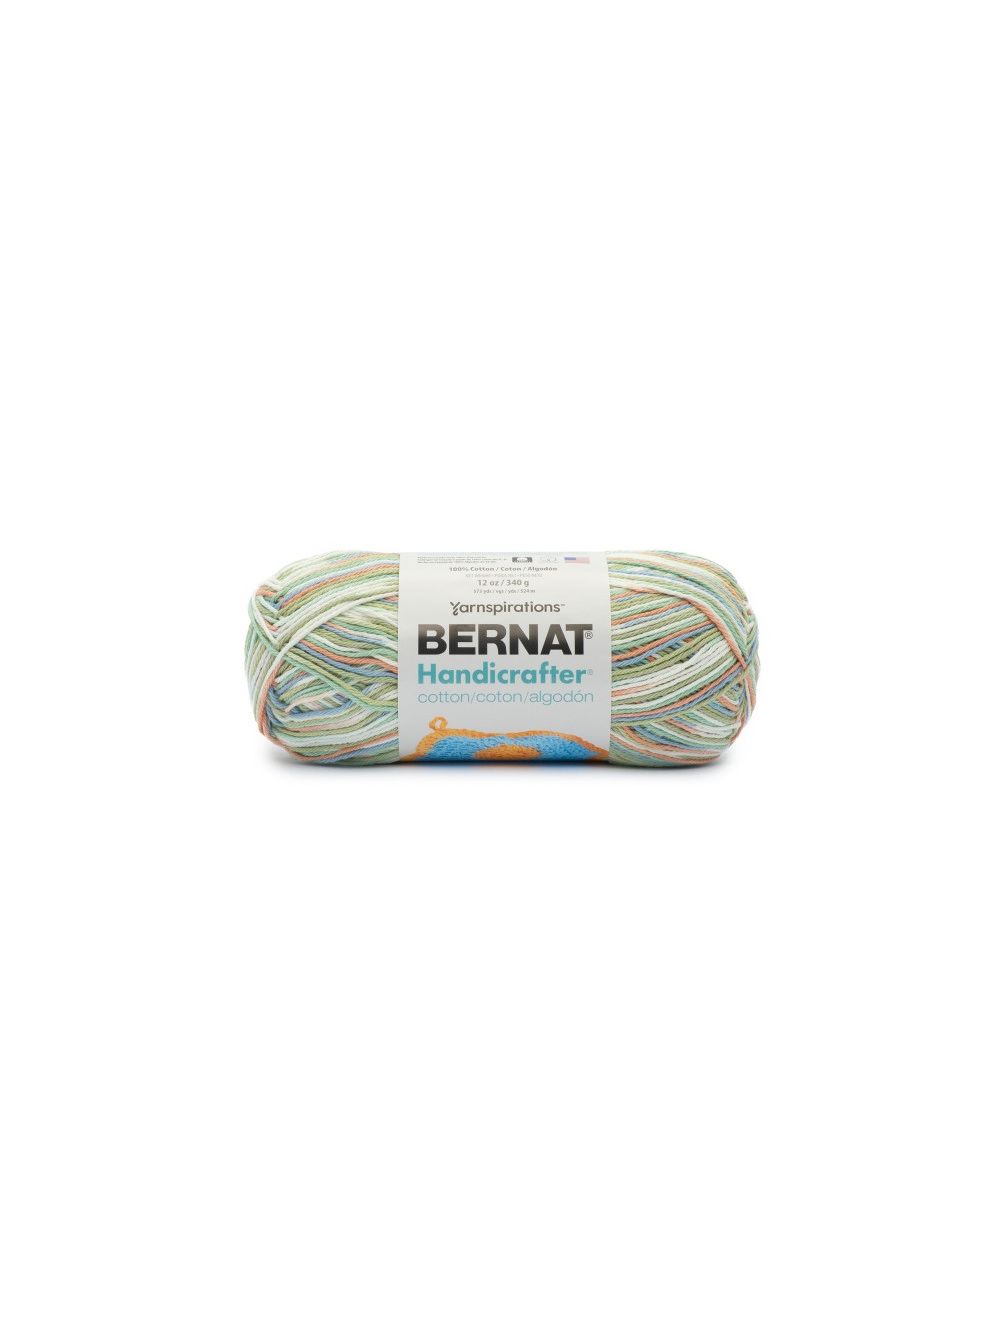 Bernat Handicrafter Cotton Yarn 340g - Ombres